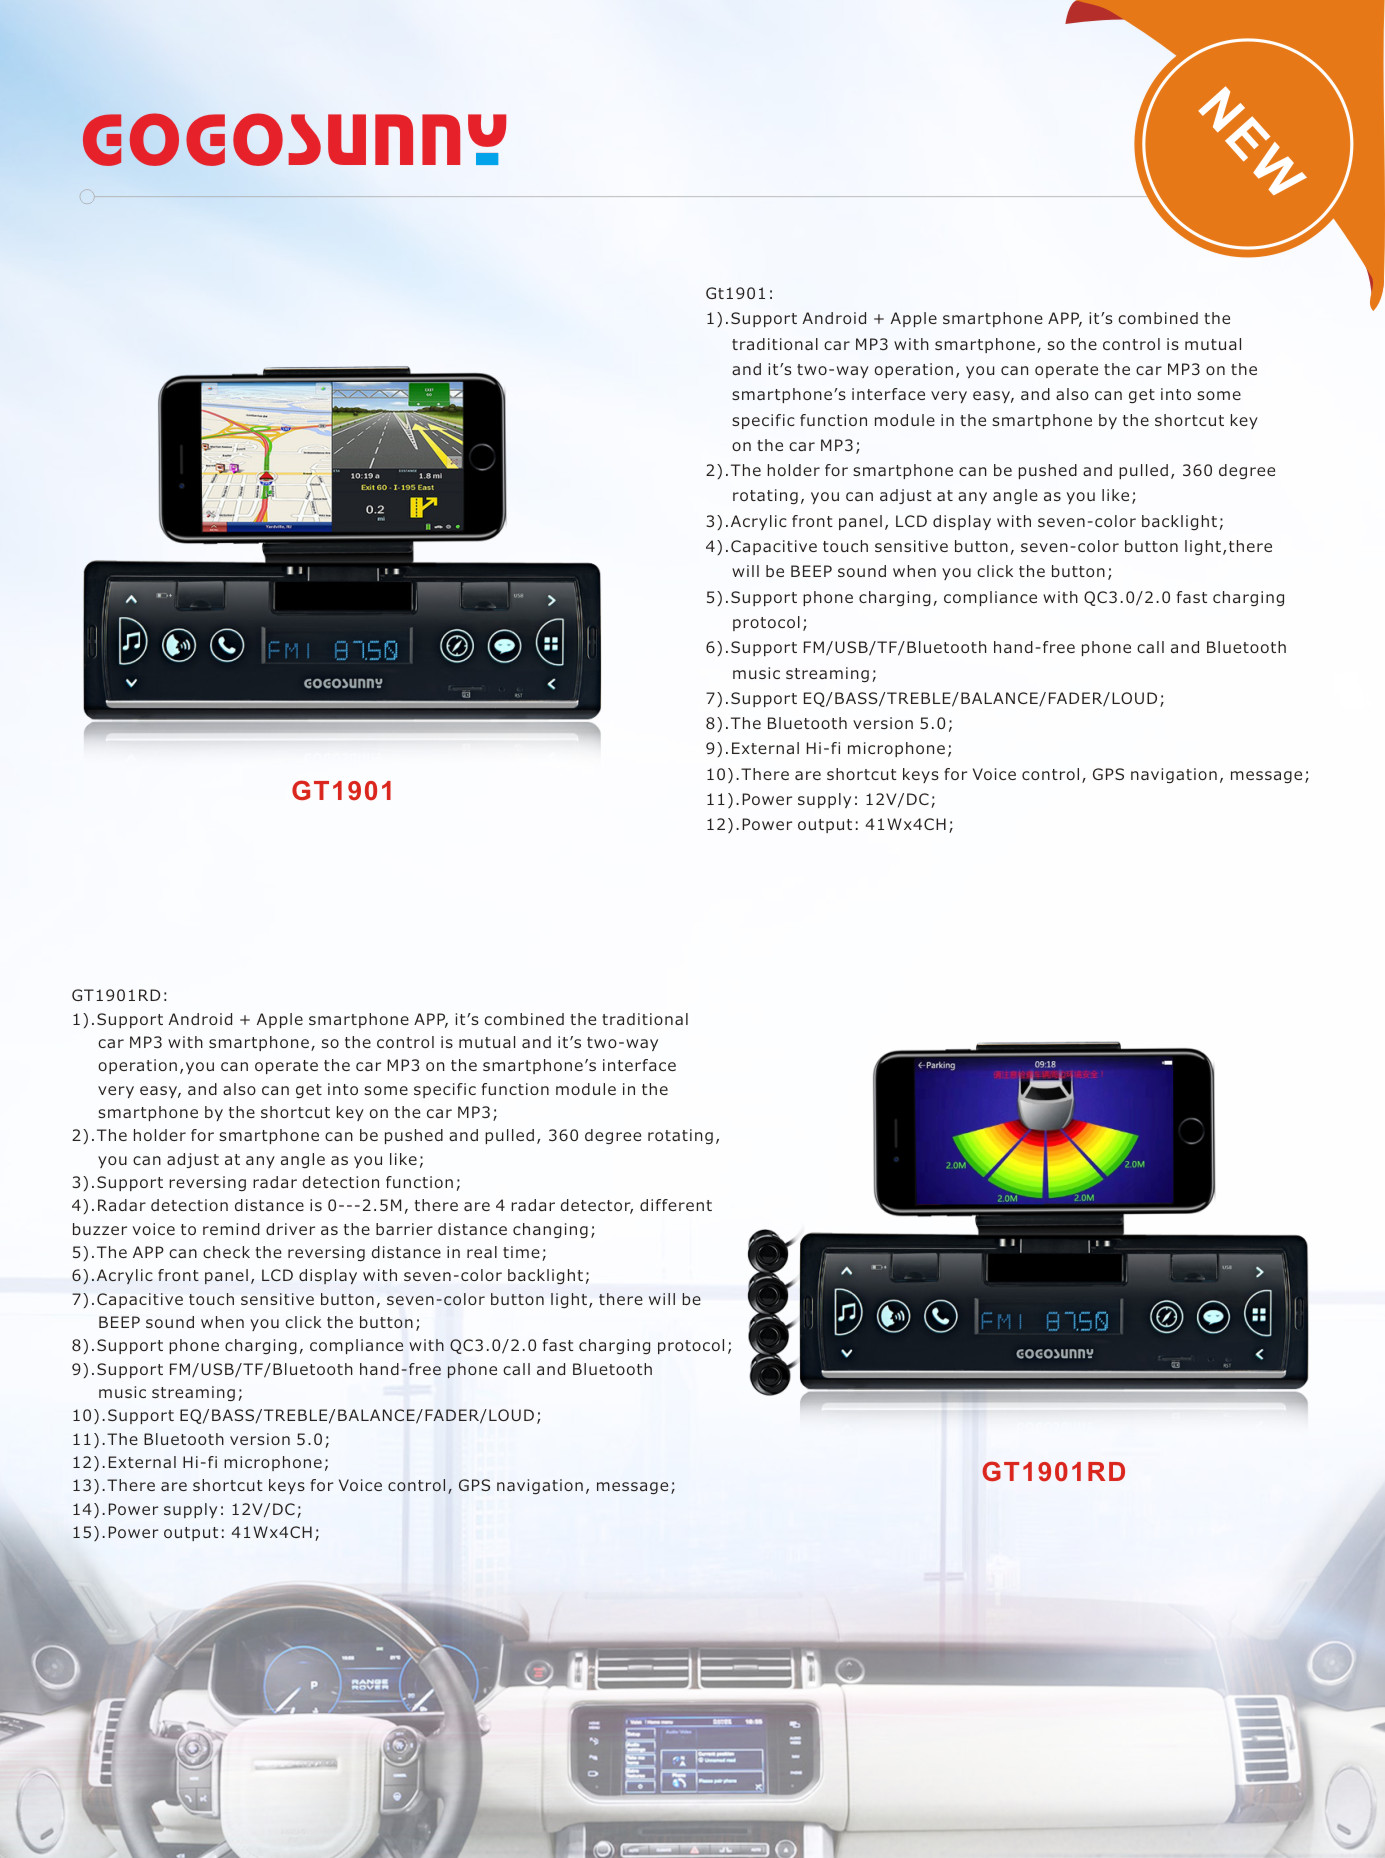 1DIN LCD screen /Smart phone receiver /Bluetooth/USB/APP Control Car MP3 Player